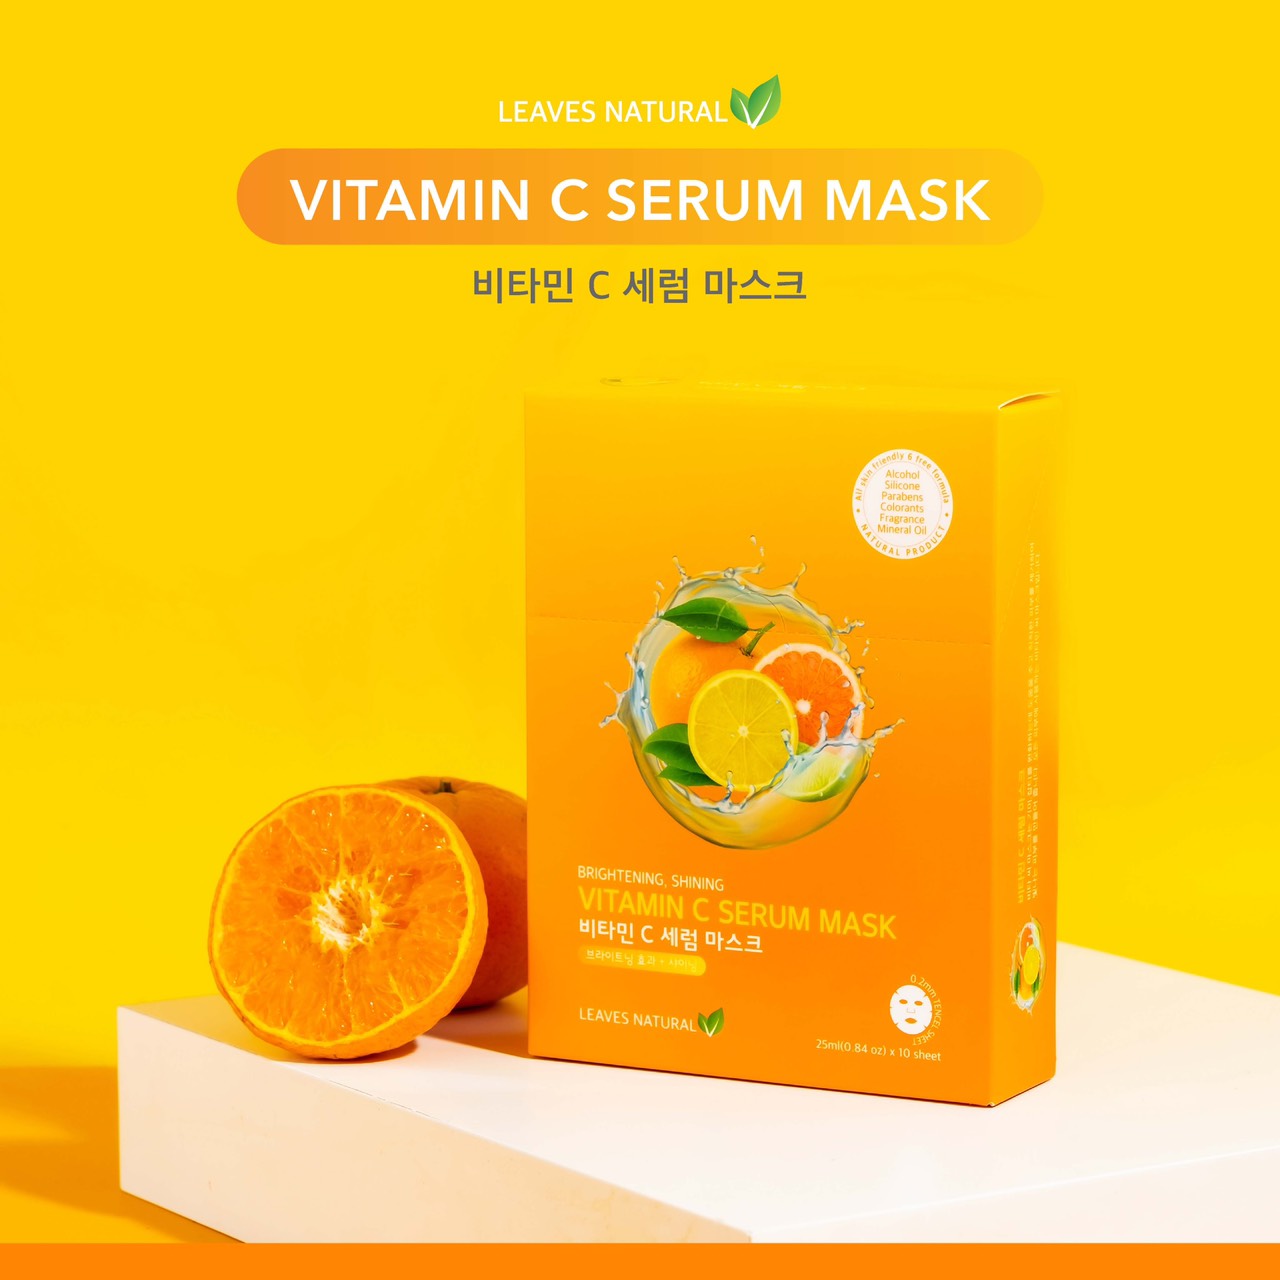 Leaves  Natural Vitamin C Serum Mask Sheet  มาสก์ที่อุดมไปด้วย วิตามินซี ช่วยลดจุดด่างดำ ให้ผิวกระจ่างใส บำรุงให้ผิวหน้าชุ่มชื้นและกระจ่างใส ไม่หมองคล้ำ ช่วยฟื้นฟูสภาพผิว ลดสัญญาณความเหนื่อยล้า และเผยผิวใหม่สว่างใสกว่าเดิม